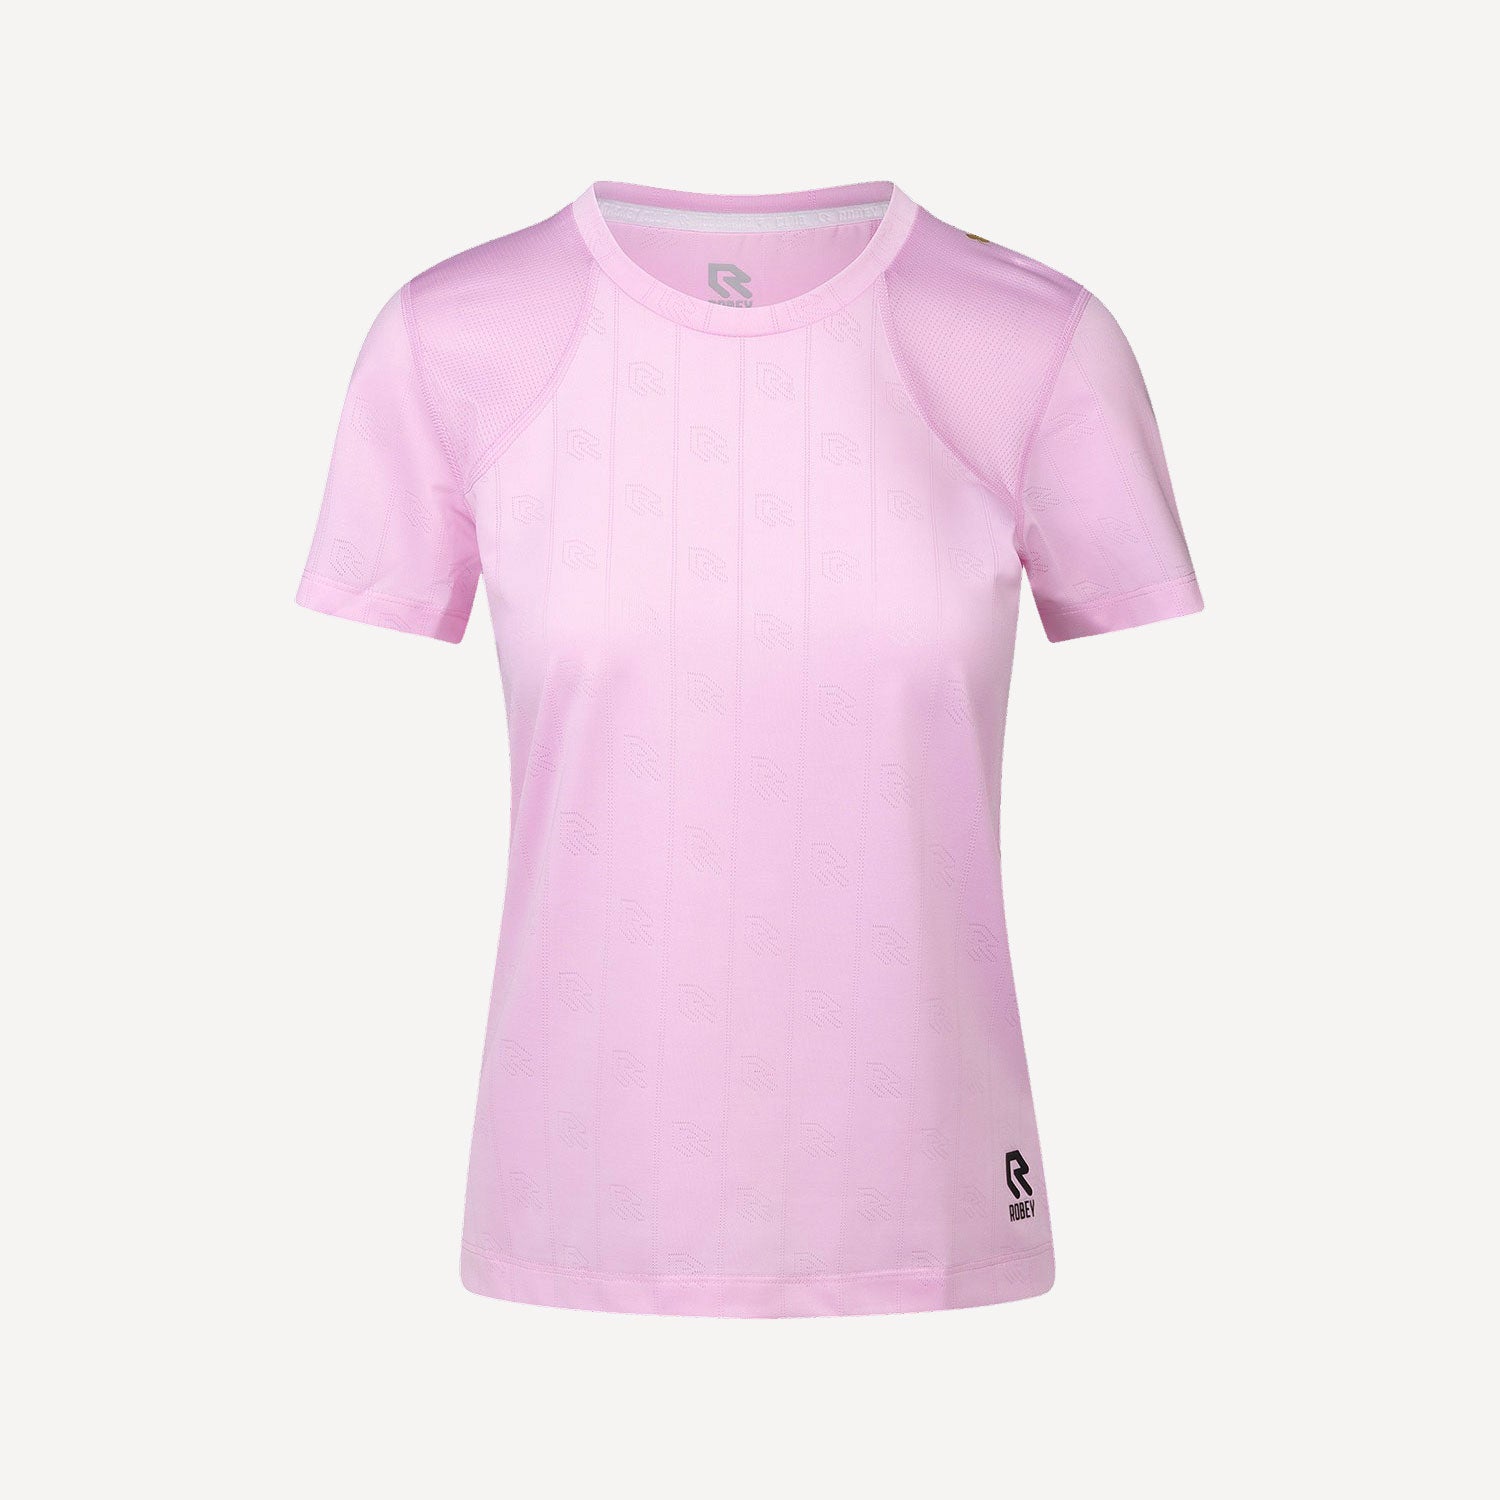 Robey Ace Women's Tennis Shirt - Pink (1)